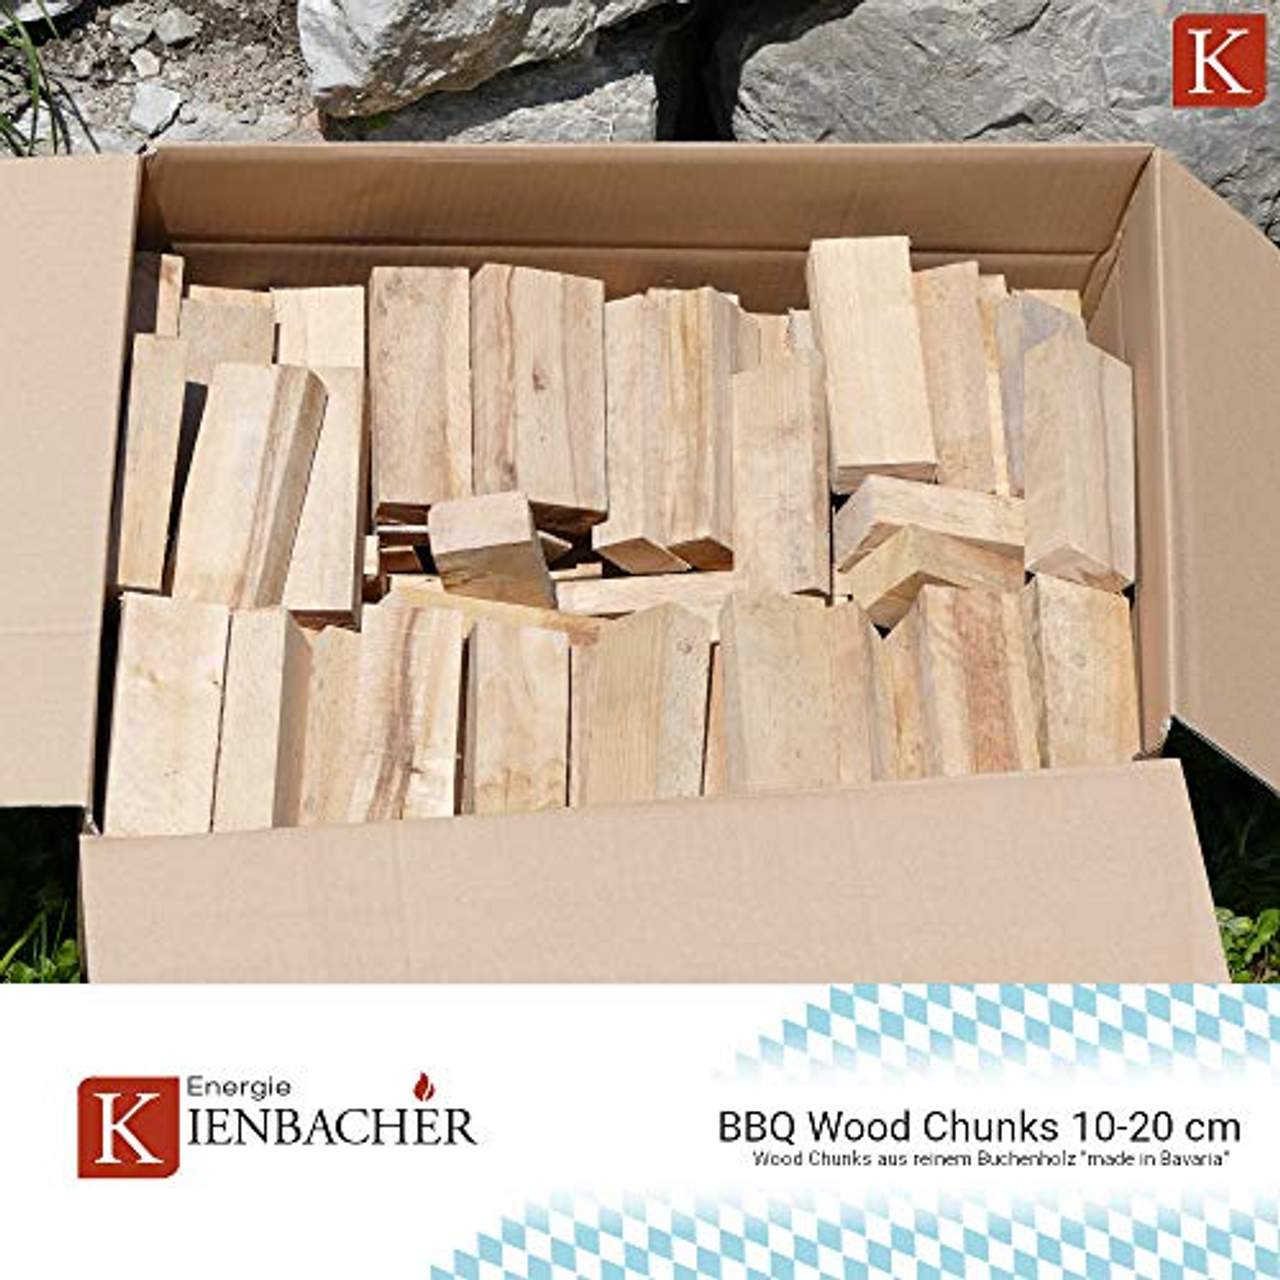 Energie Kienbacher 5-30 kg BBQ Buche sortenrein Wood Chunks Smoker Holz Räucherholz